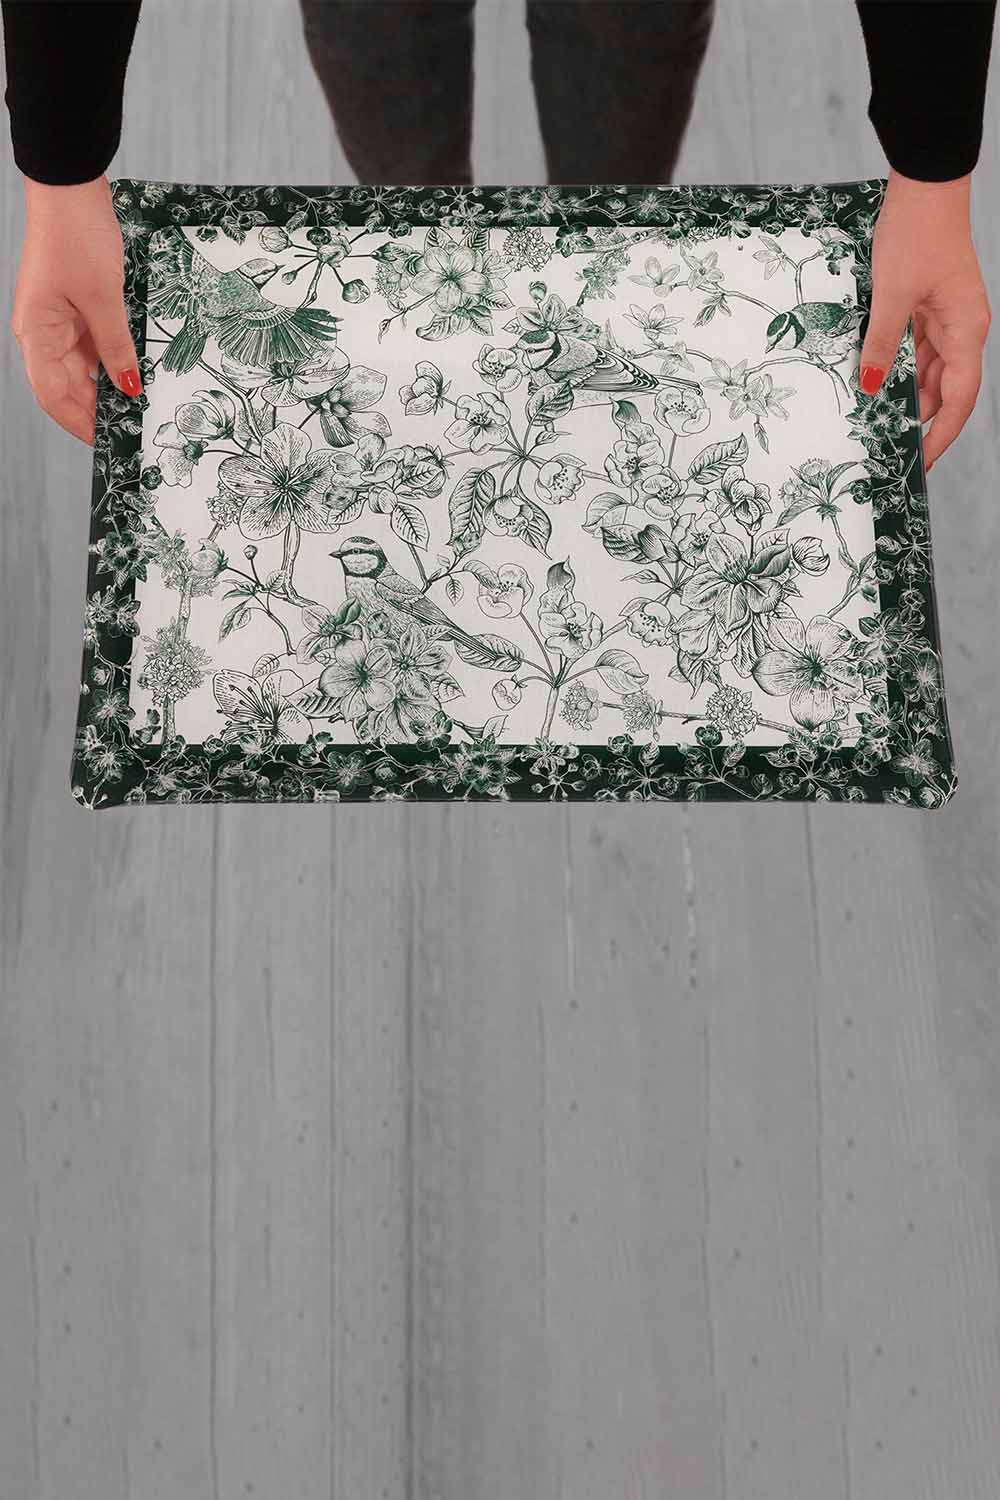 Arabela Acrylic Tray, Green, 46x36cm